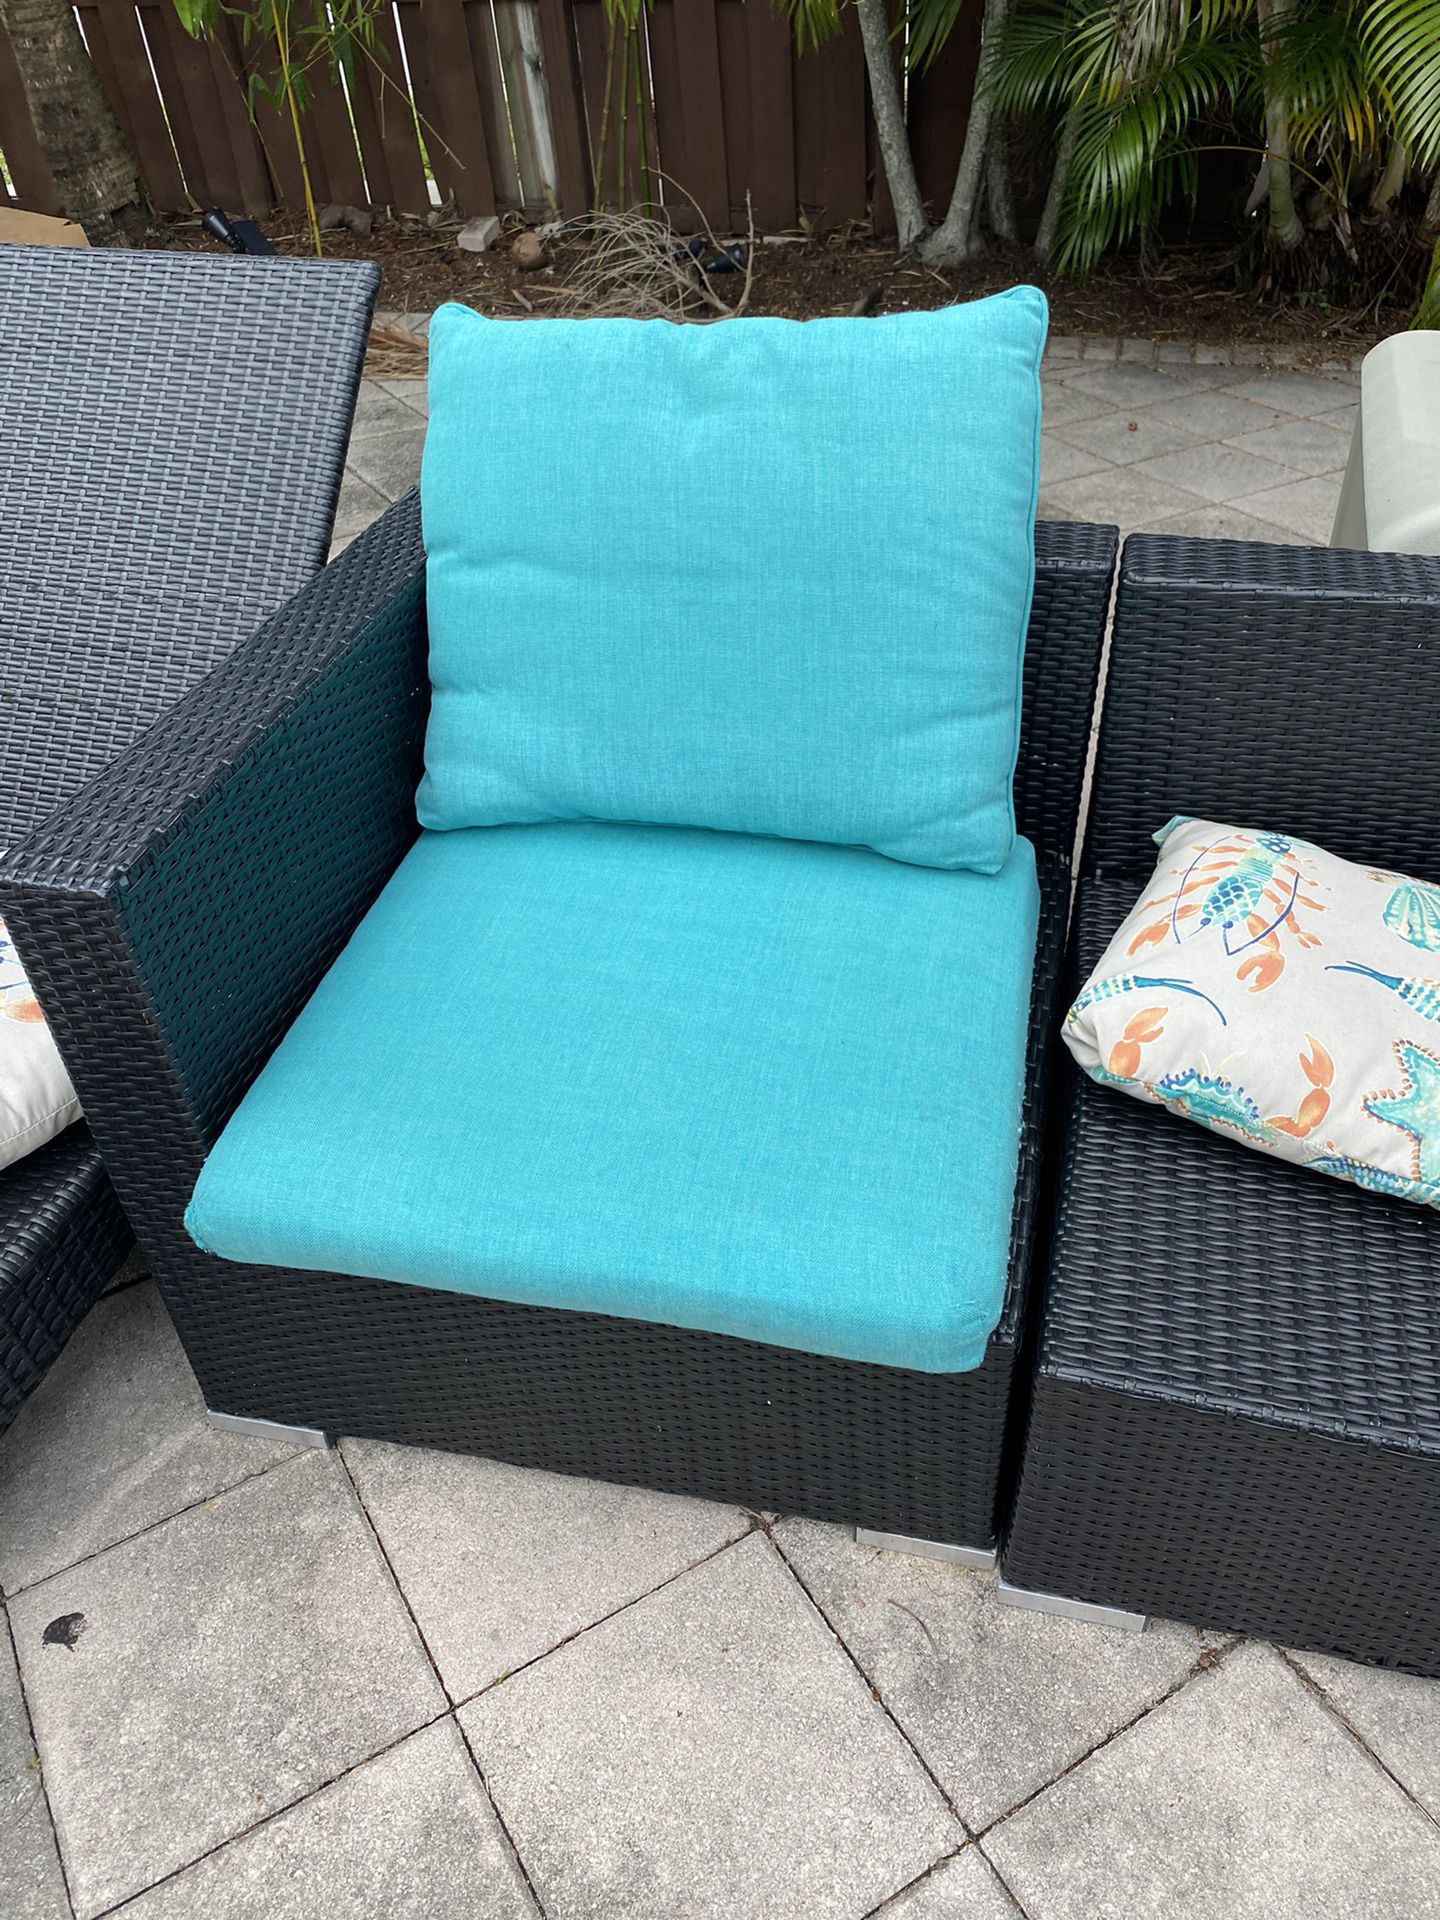 Outdoor aqua pillows for patio furniture cushions ( 5sets)